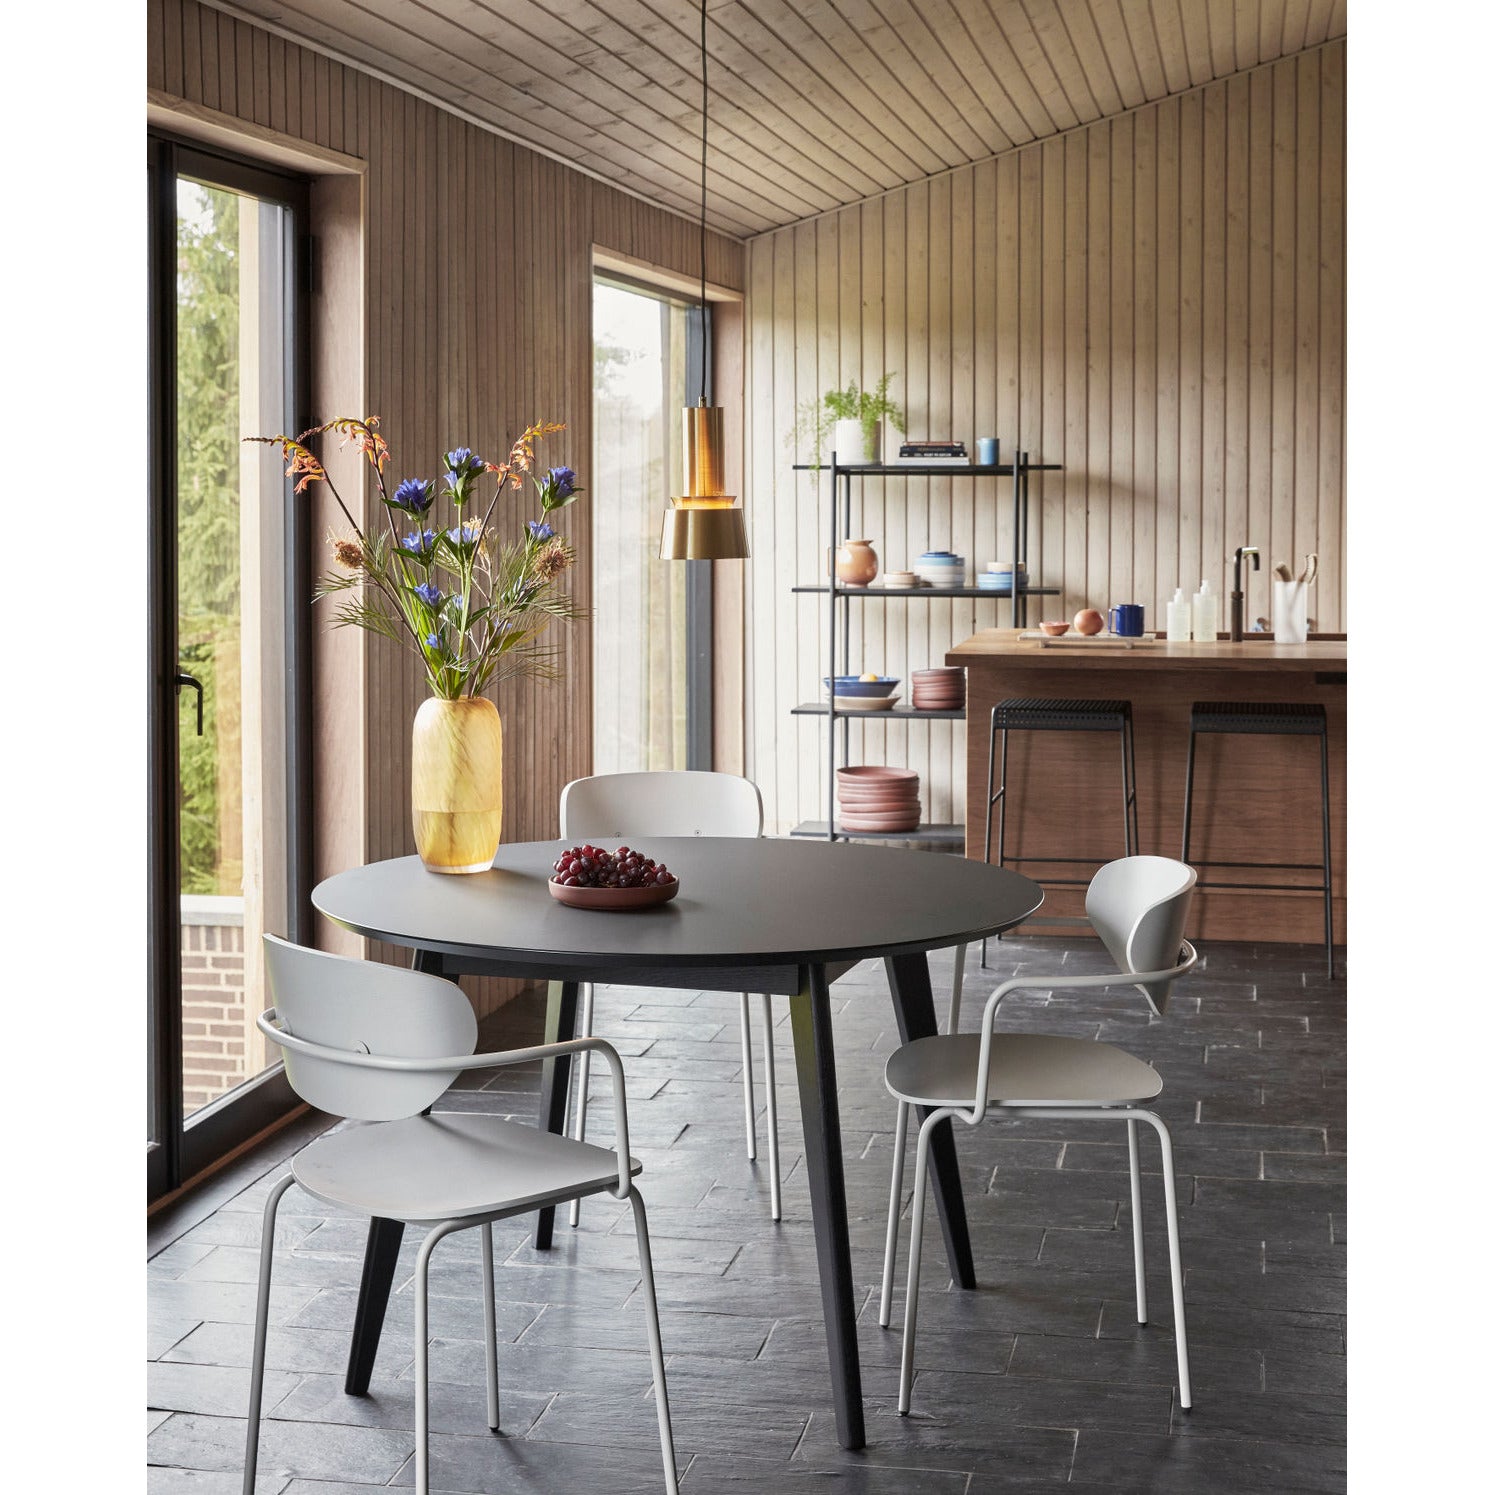 Hübsch - Stay Dining Table Round Black med laminattop Ø120xh76cm